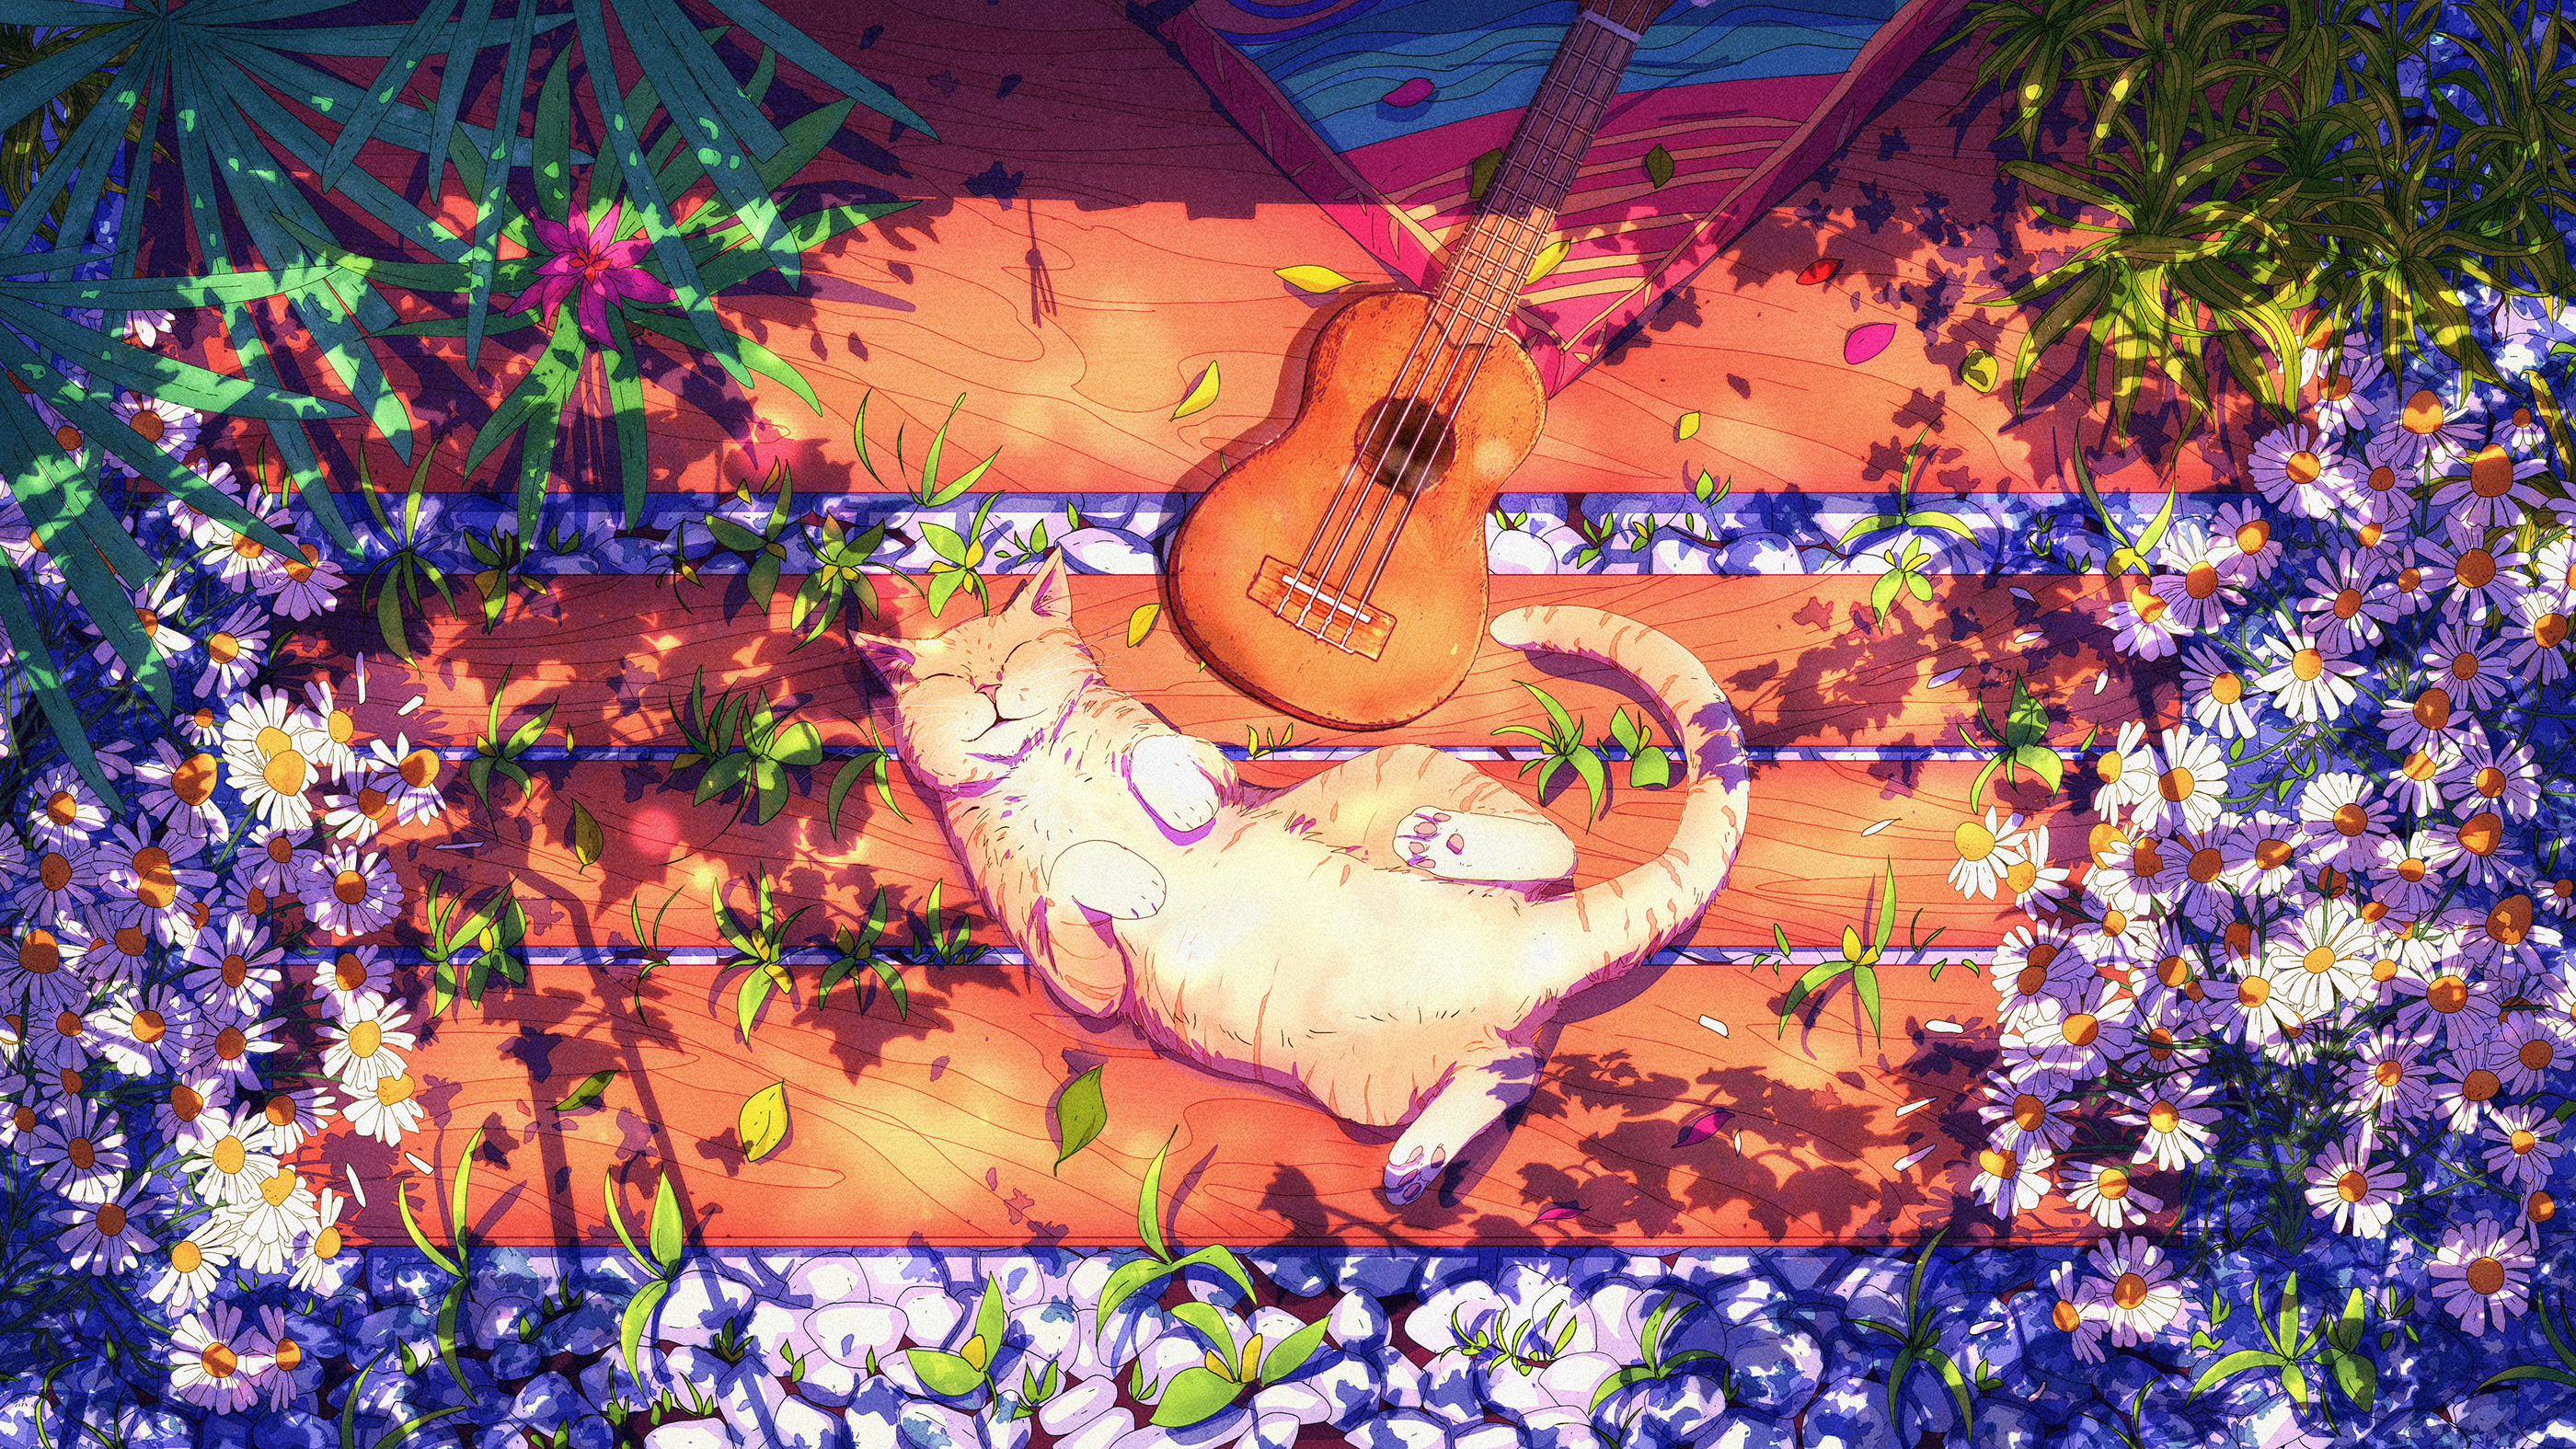 Digital Digital Art Illustration Artwork Drawing Fantasy Art Ukiyo E Nature Cats Guitar Flowers Chri 2800x1575